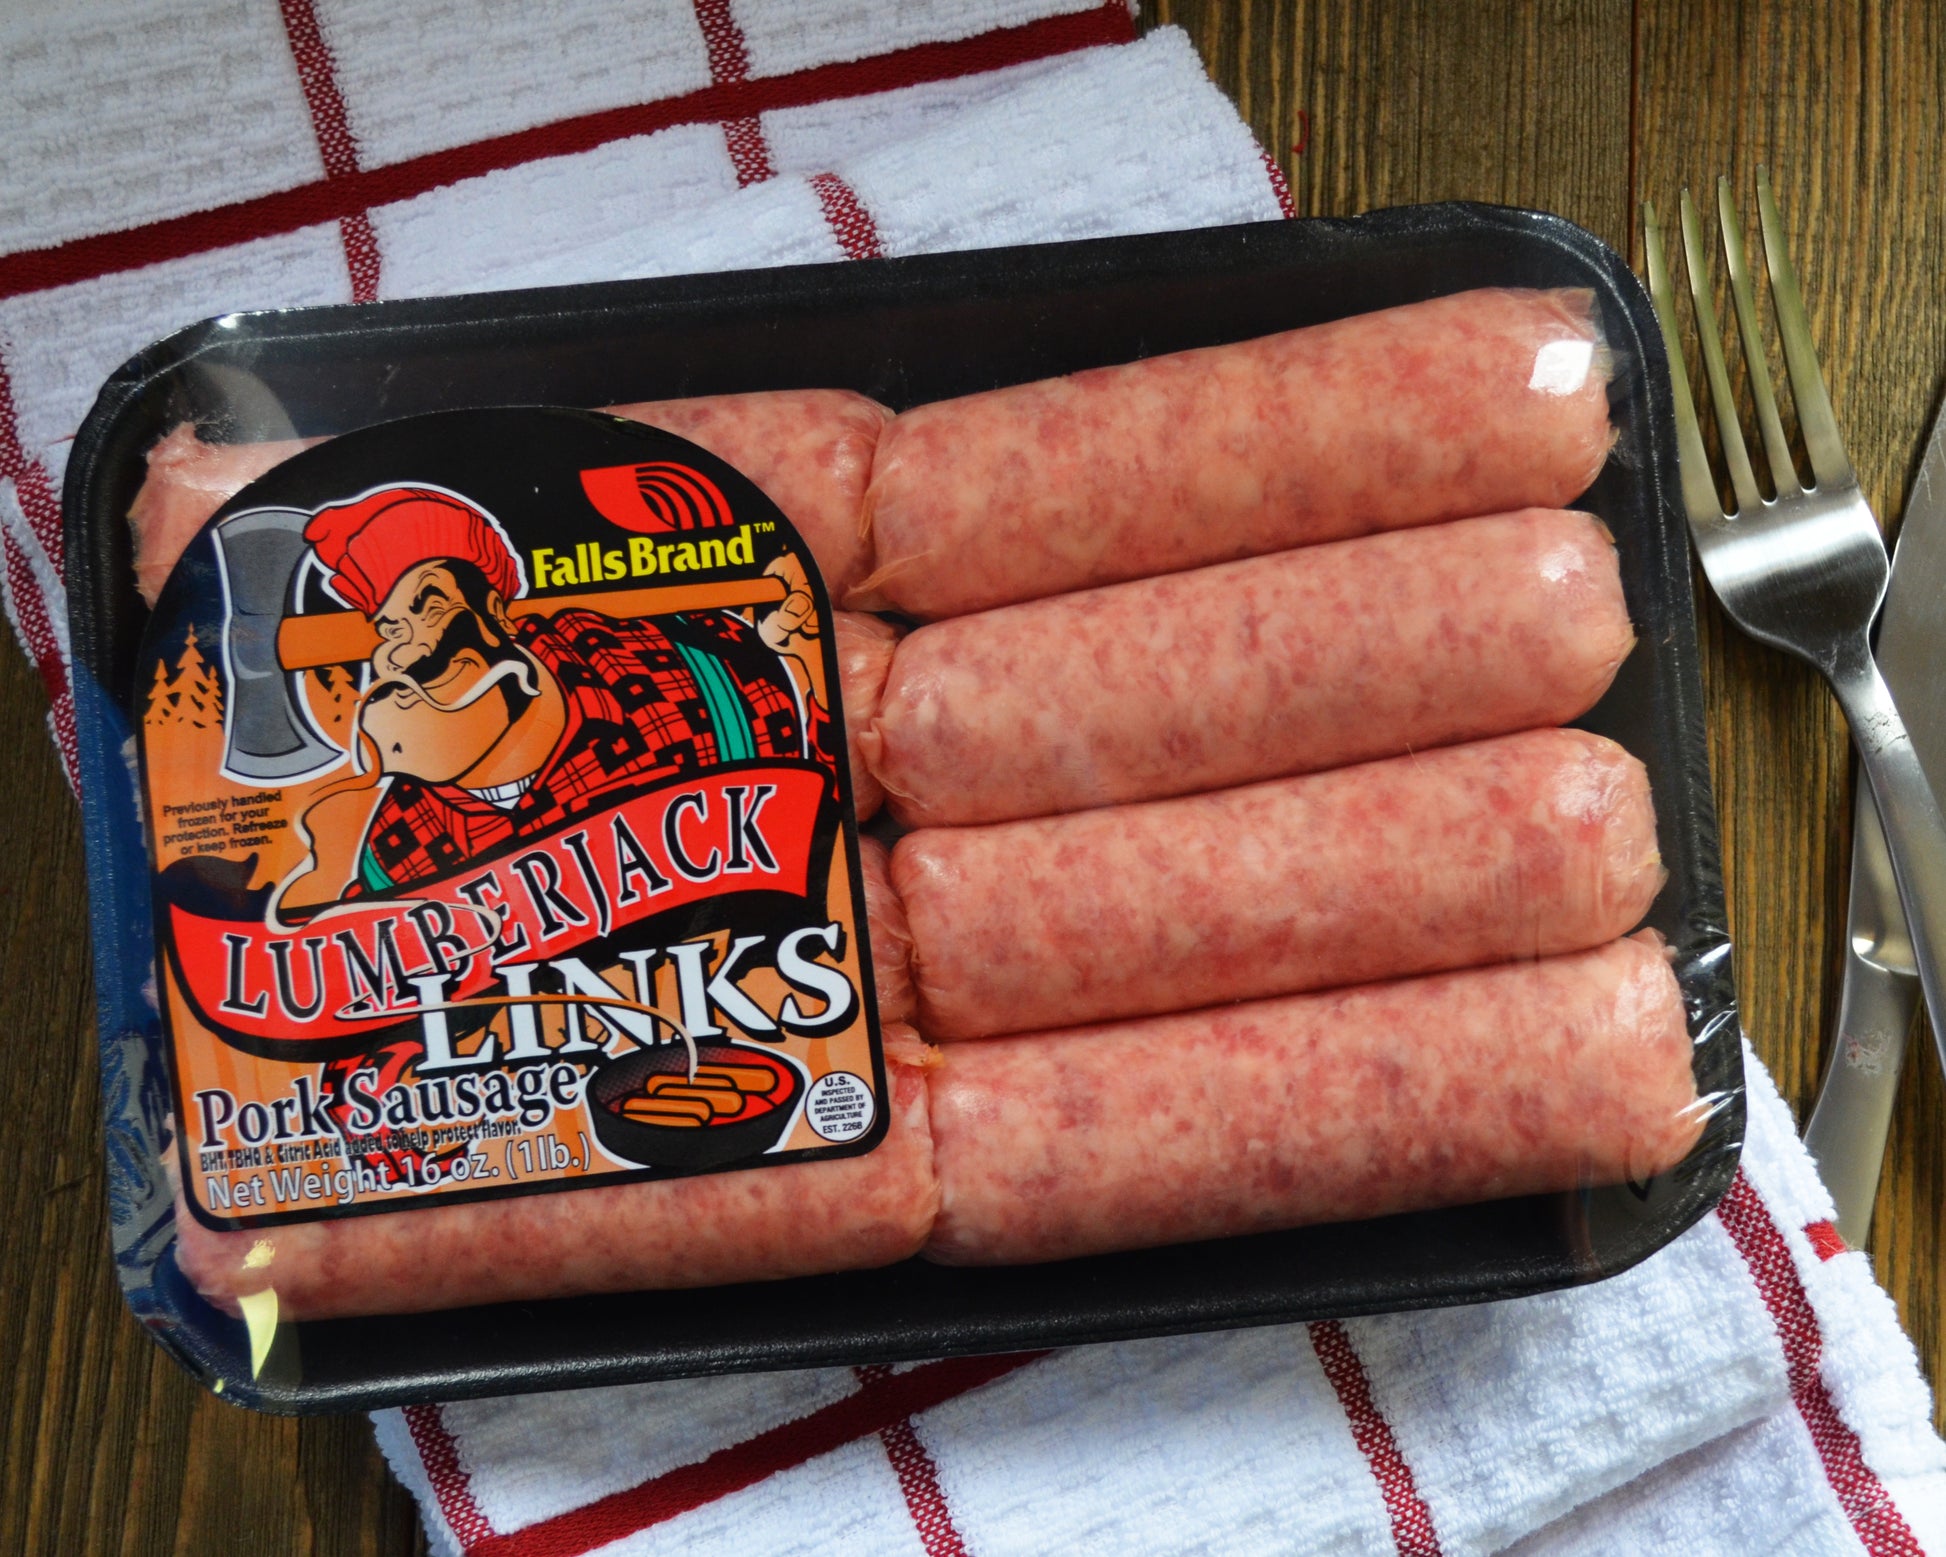 2 pounds - Sage flavored Sausage links